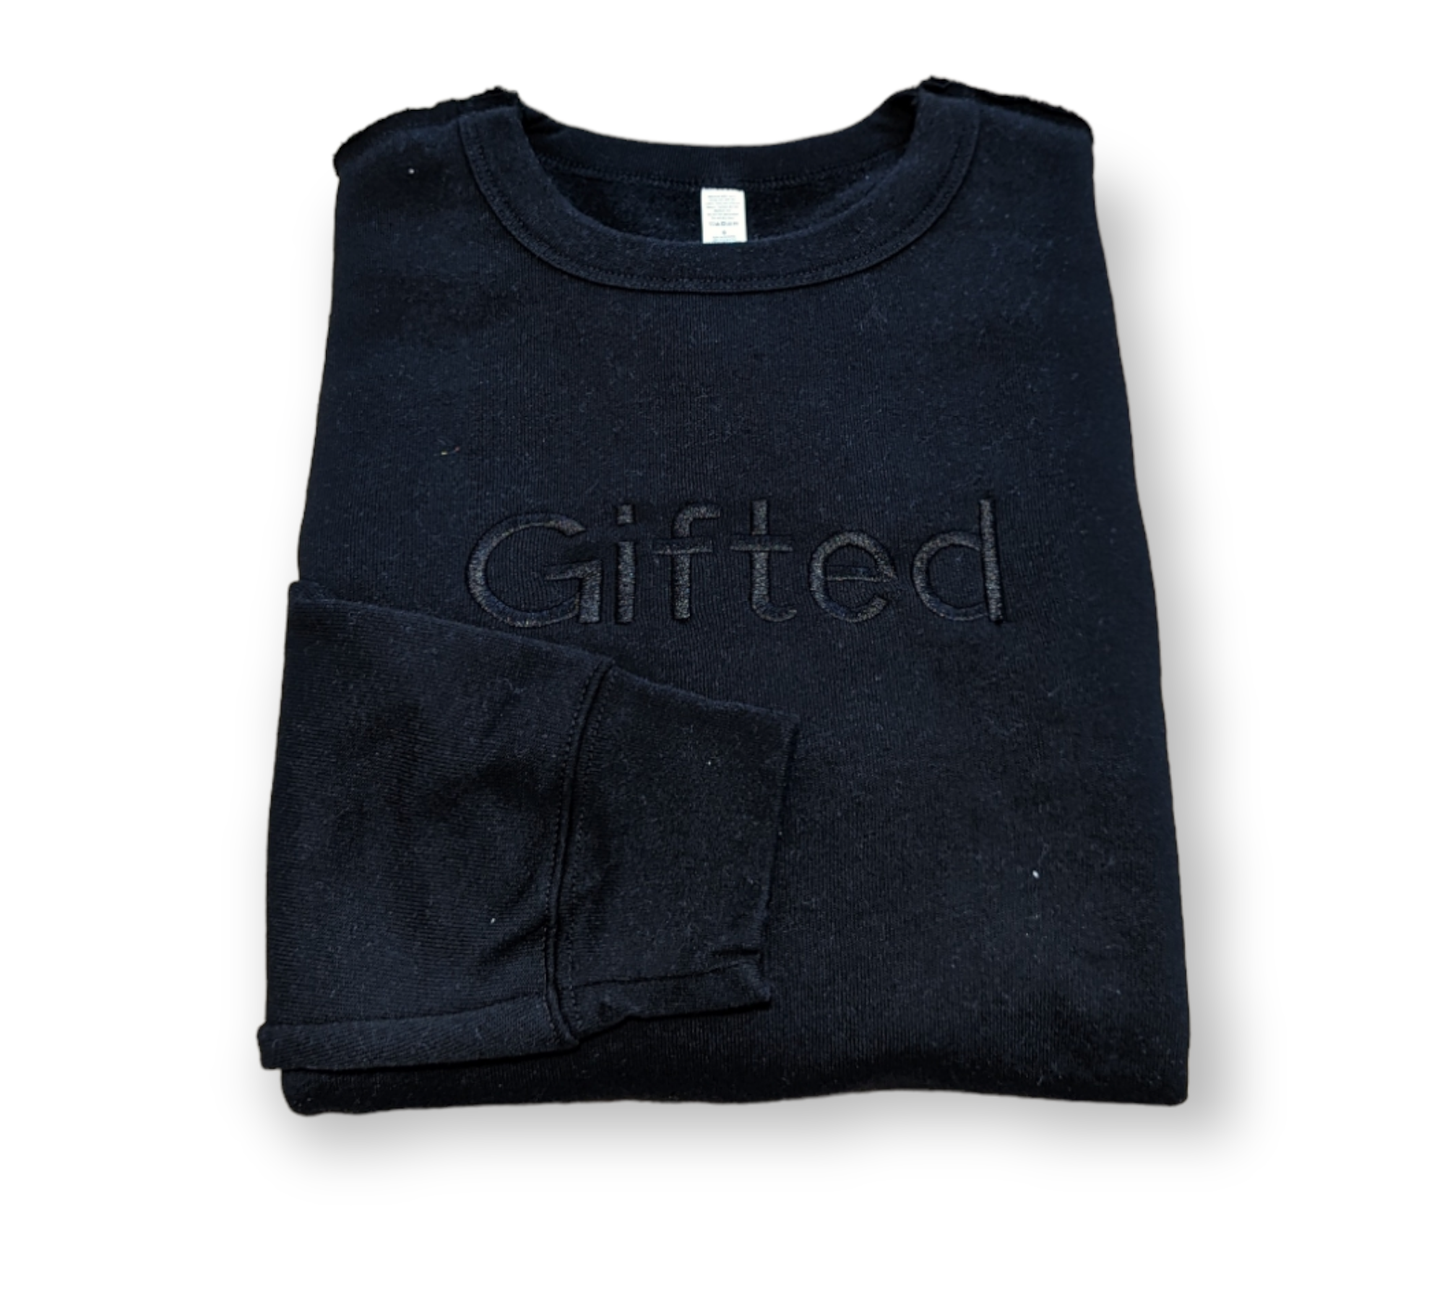 Gifted Pullover Sweatshirt - Black